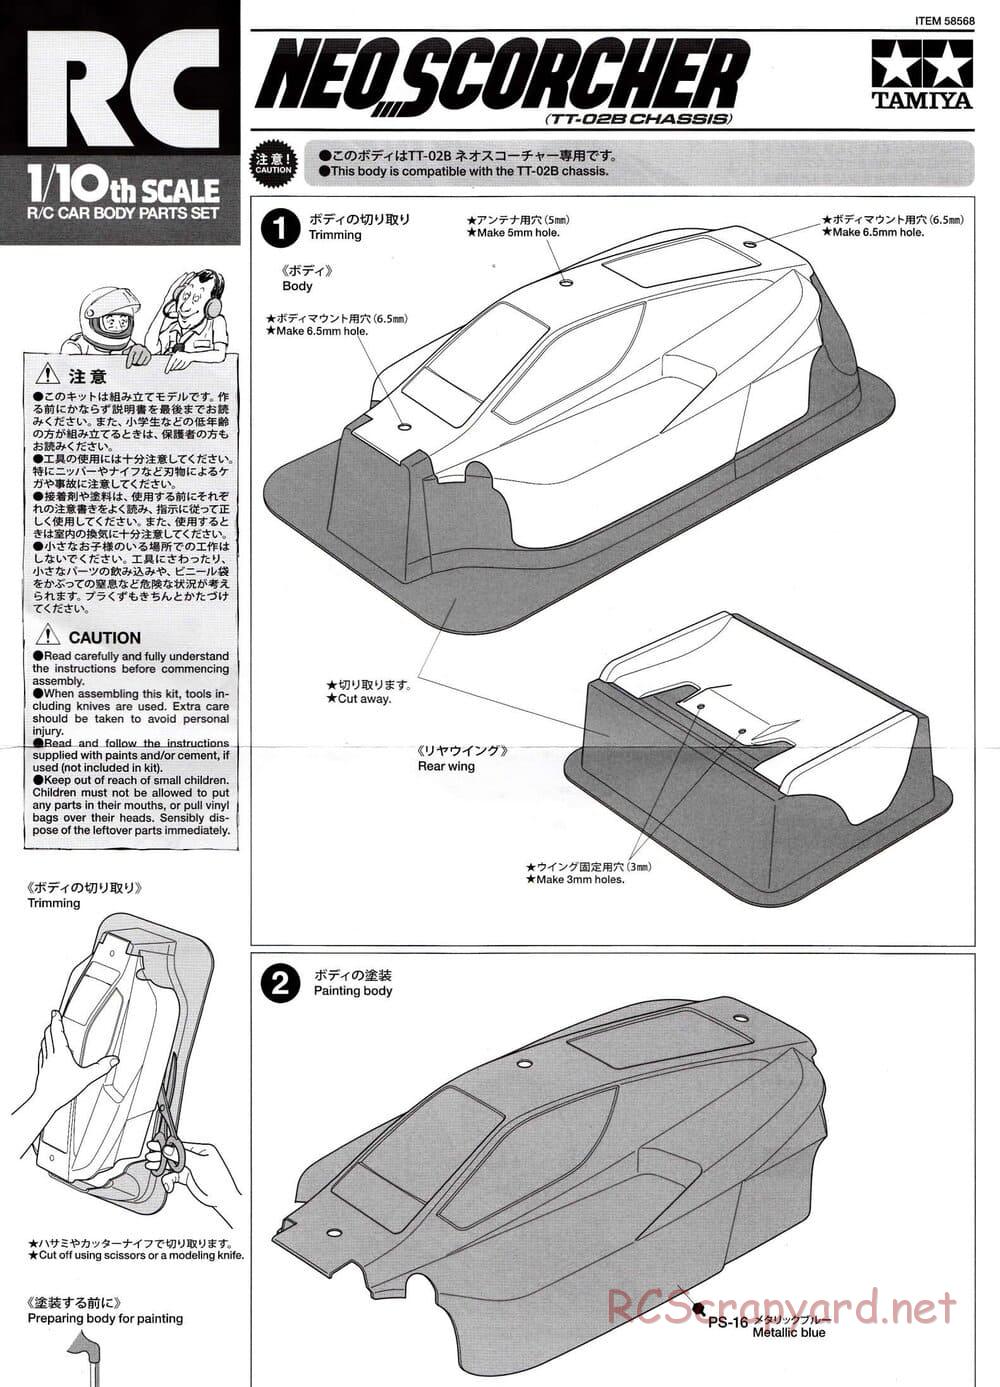 Tamiya - Neo Scorcher - TT-02B Chassis - Manual - Page 1